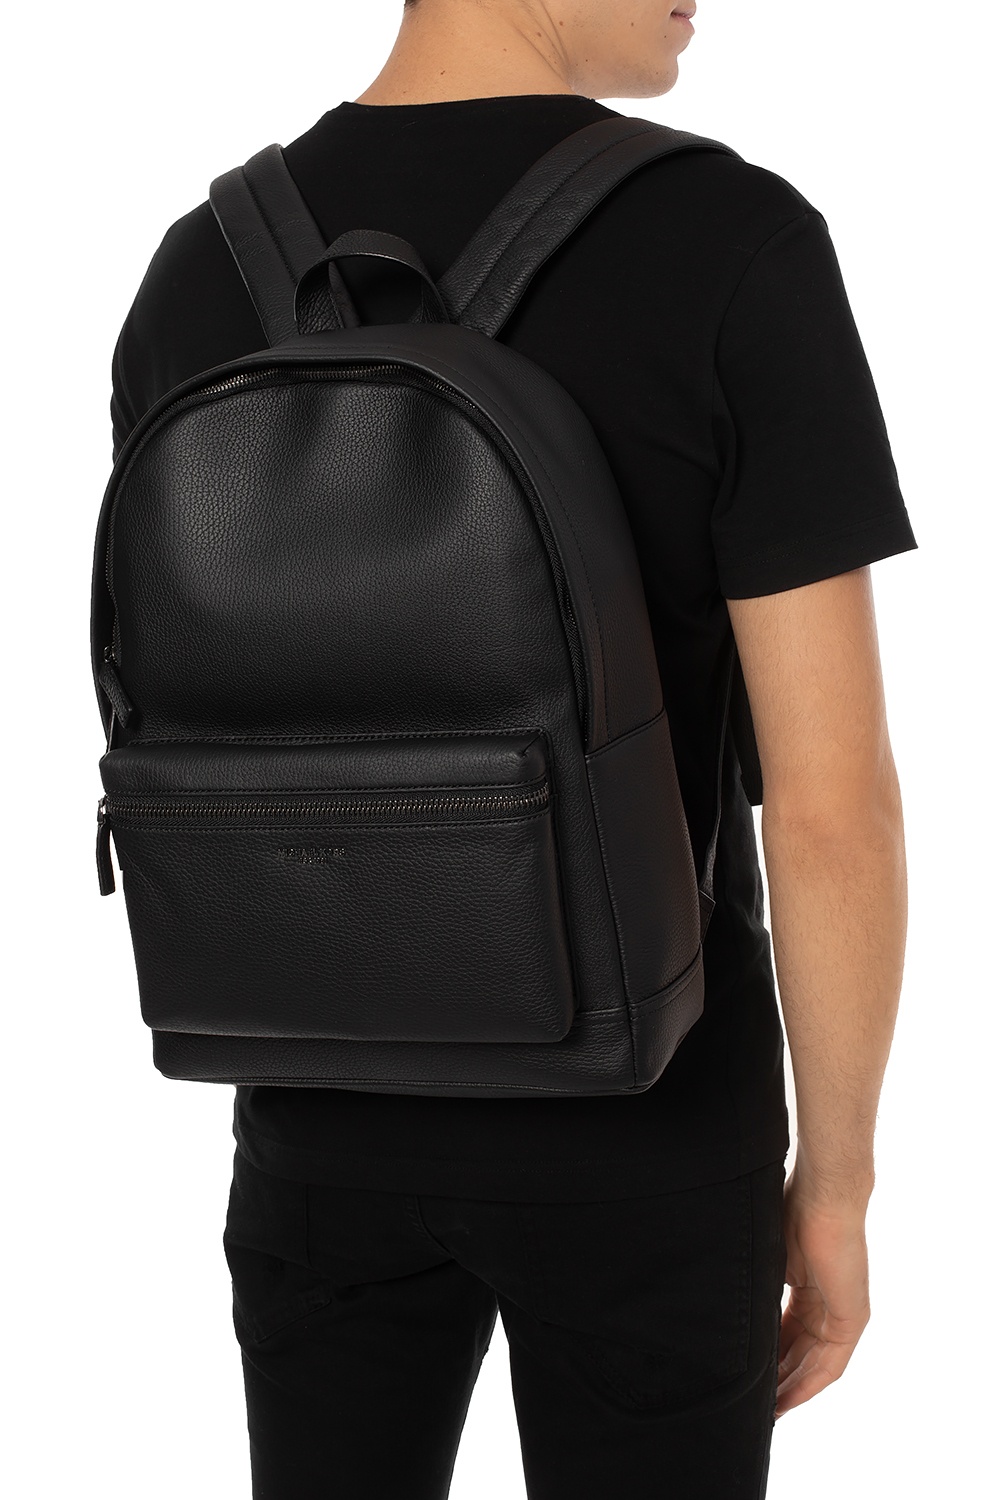 michael kors bryant backpack